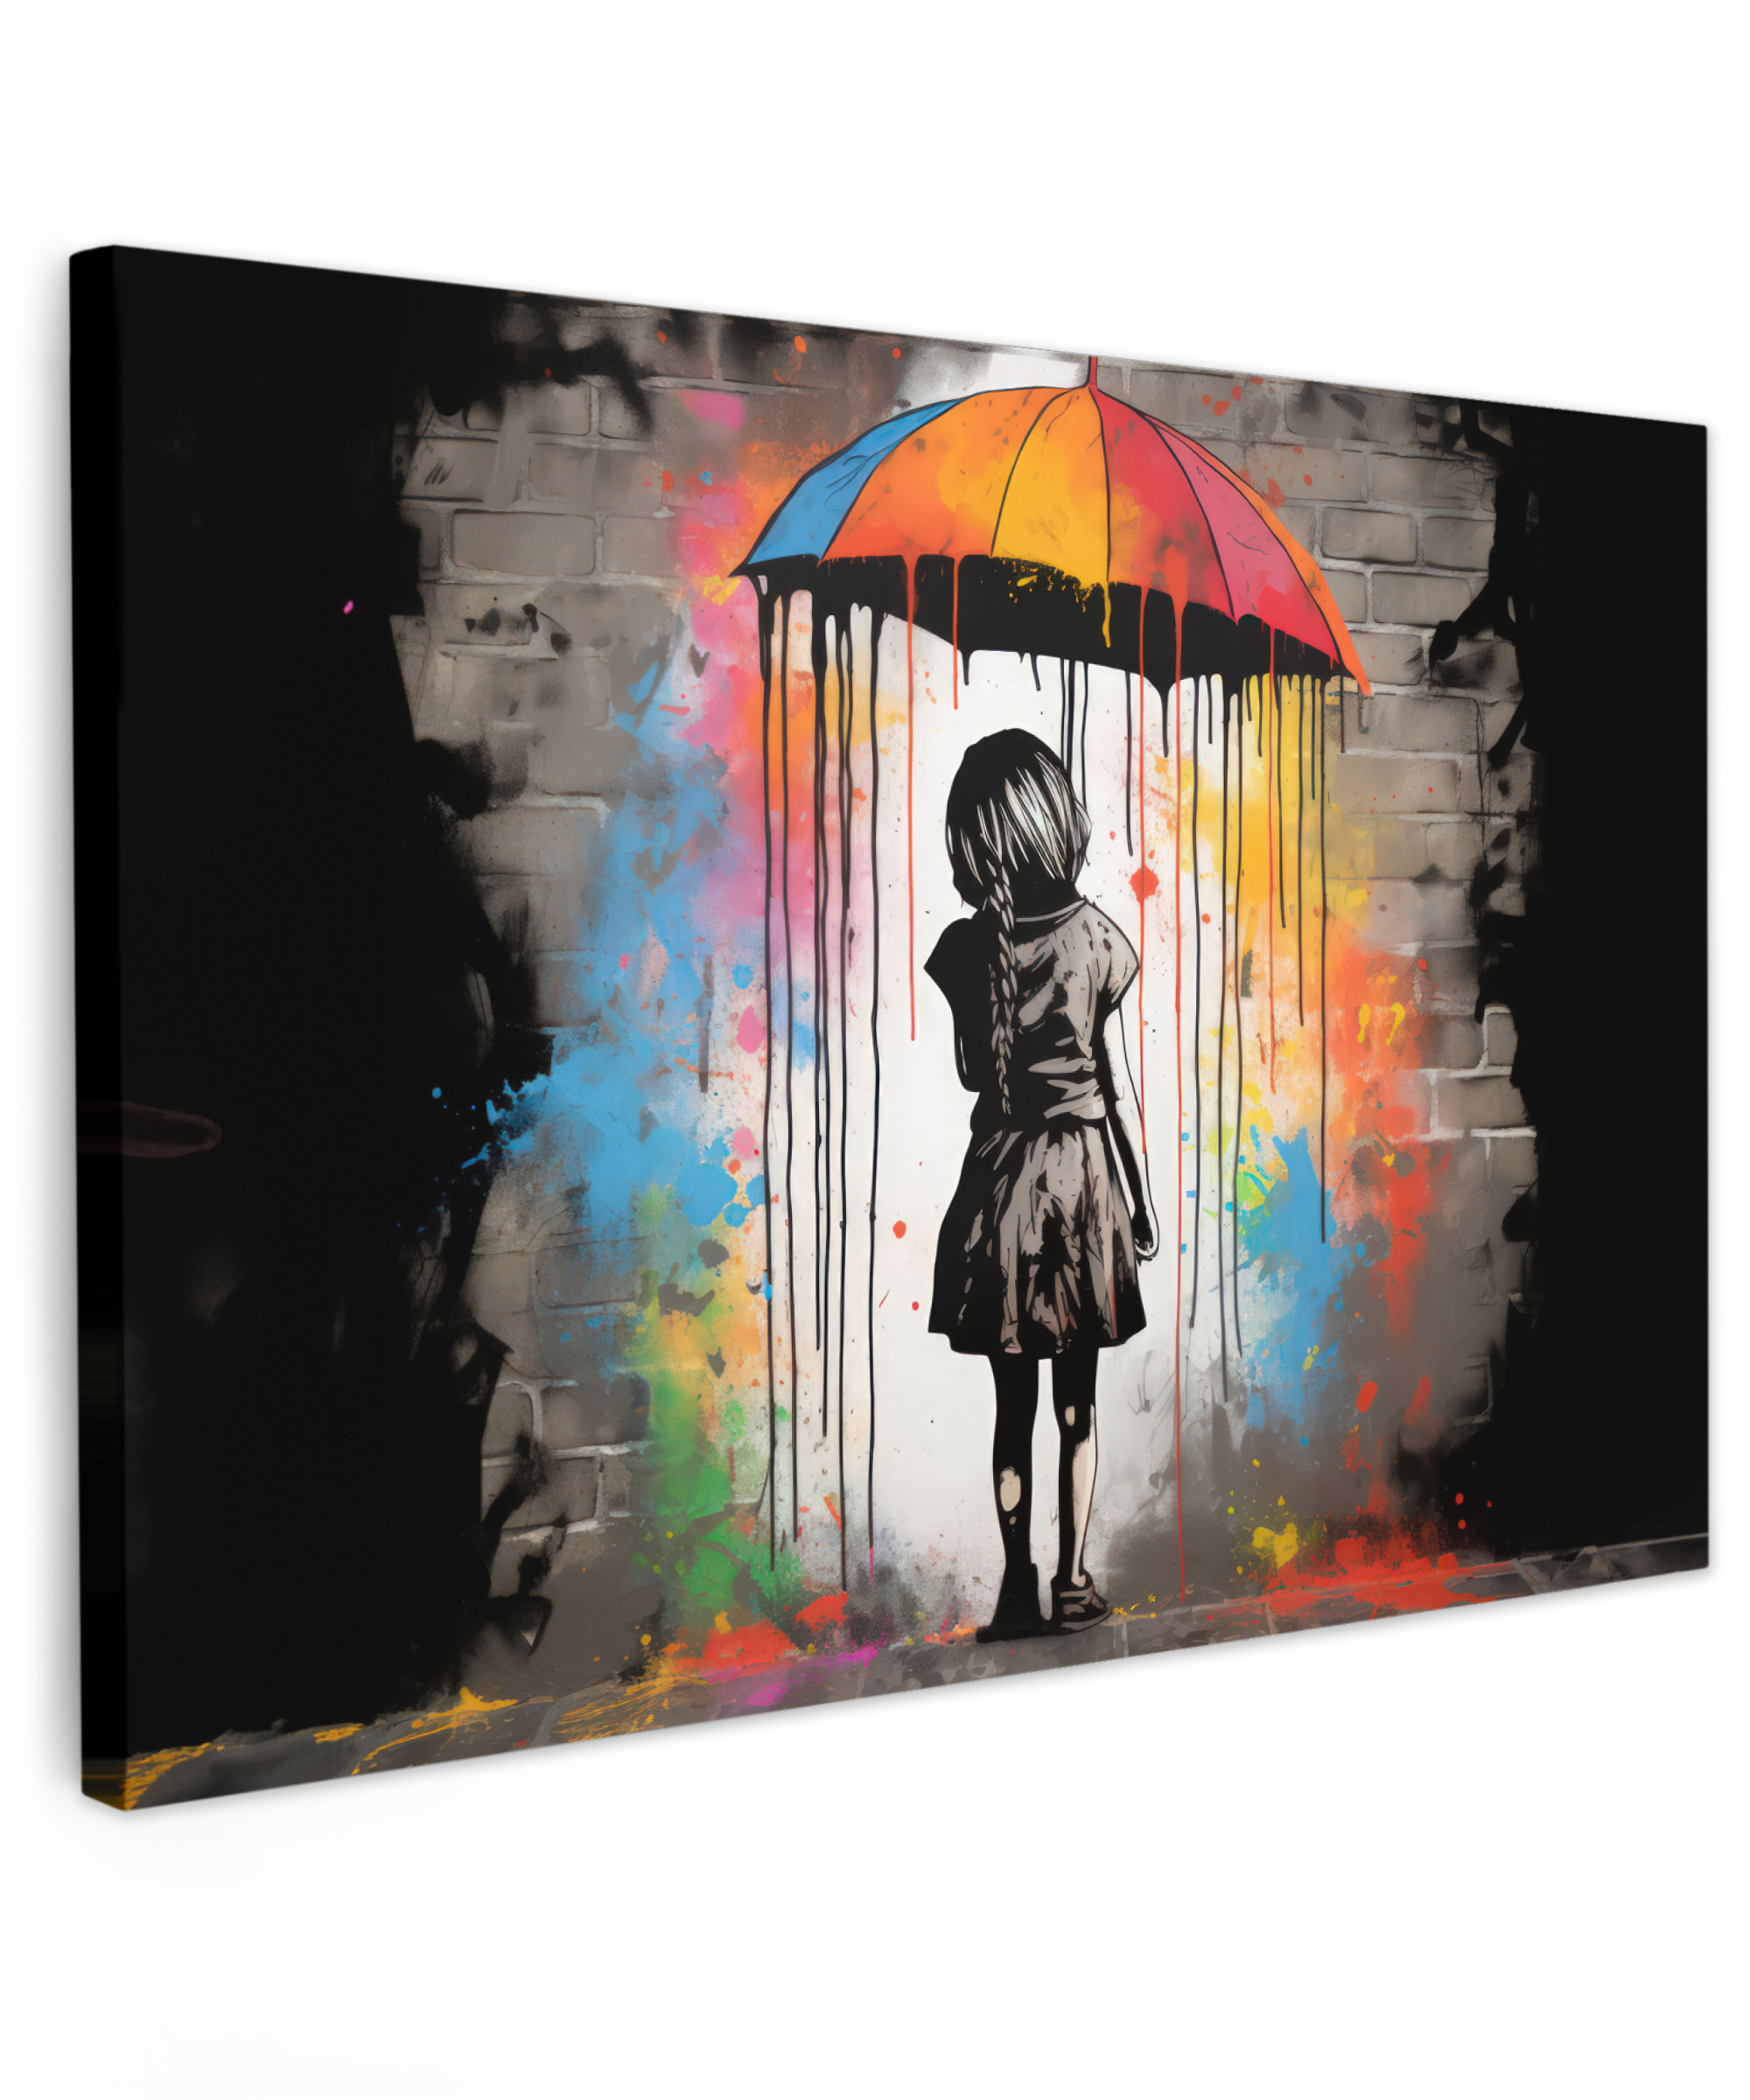 Canvas schilderij - Meisje - Kunst - Paraplu - Graffiti - Kleuren - Muur